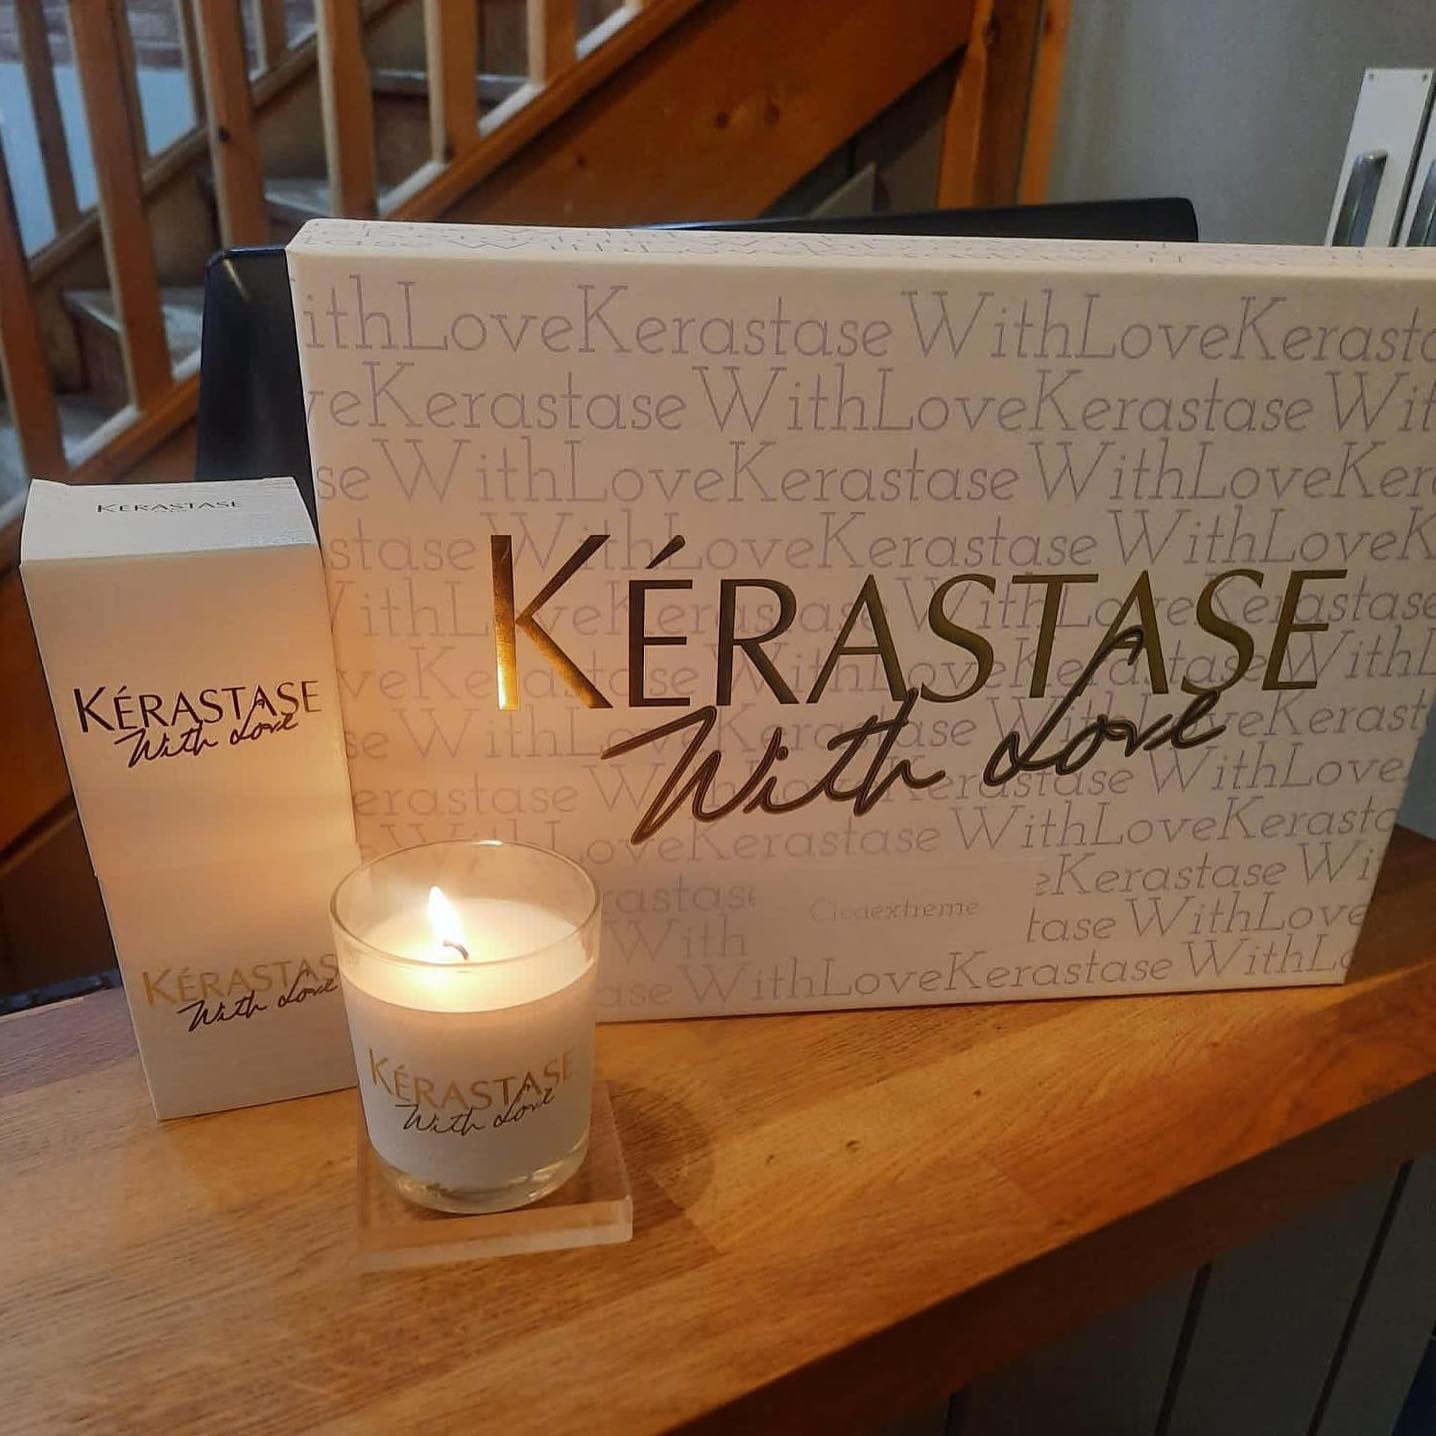 Kérastase Christmas Gift Sets Now Available In-Salon